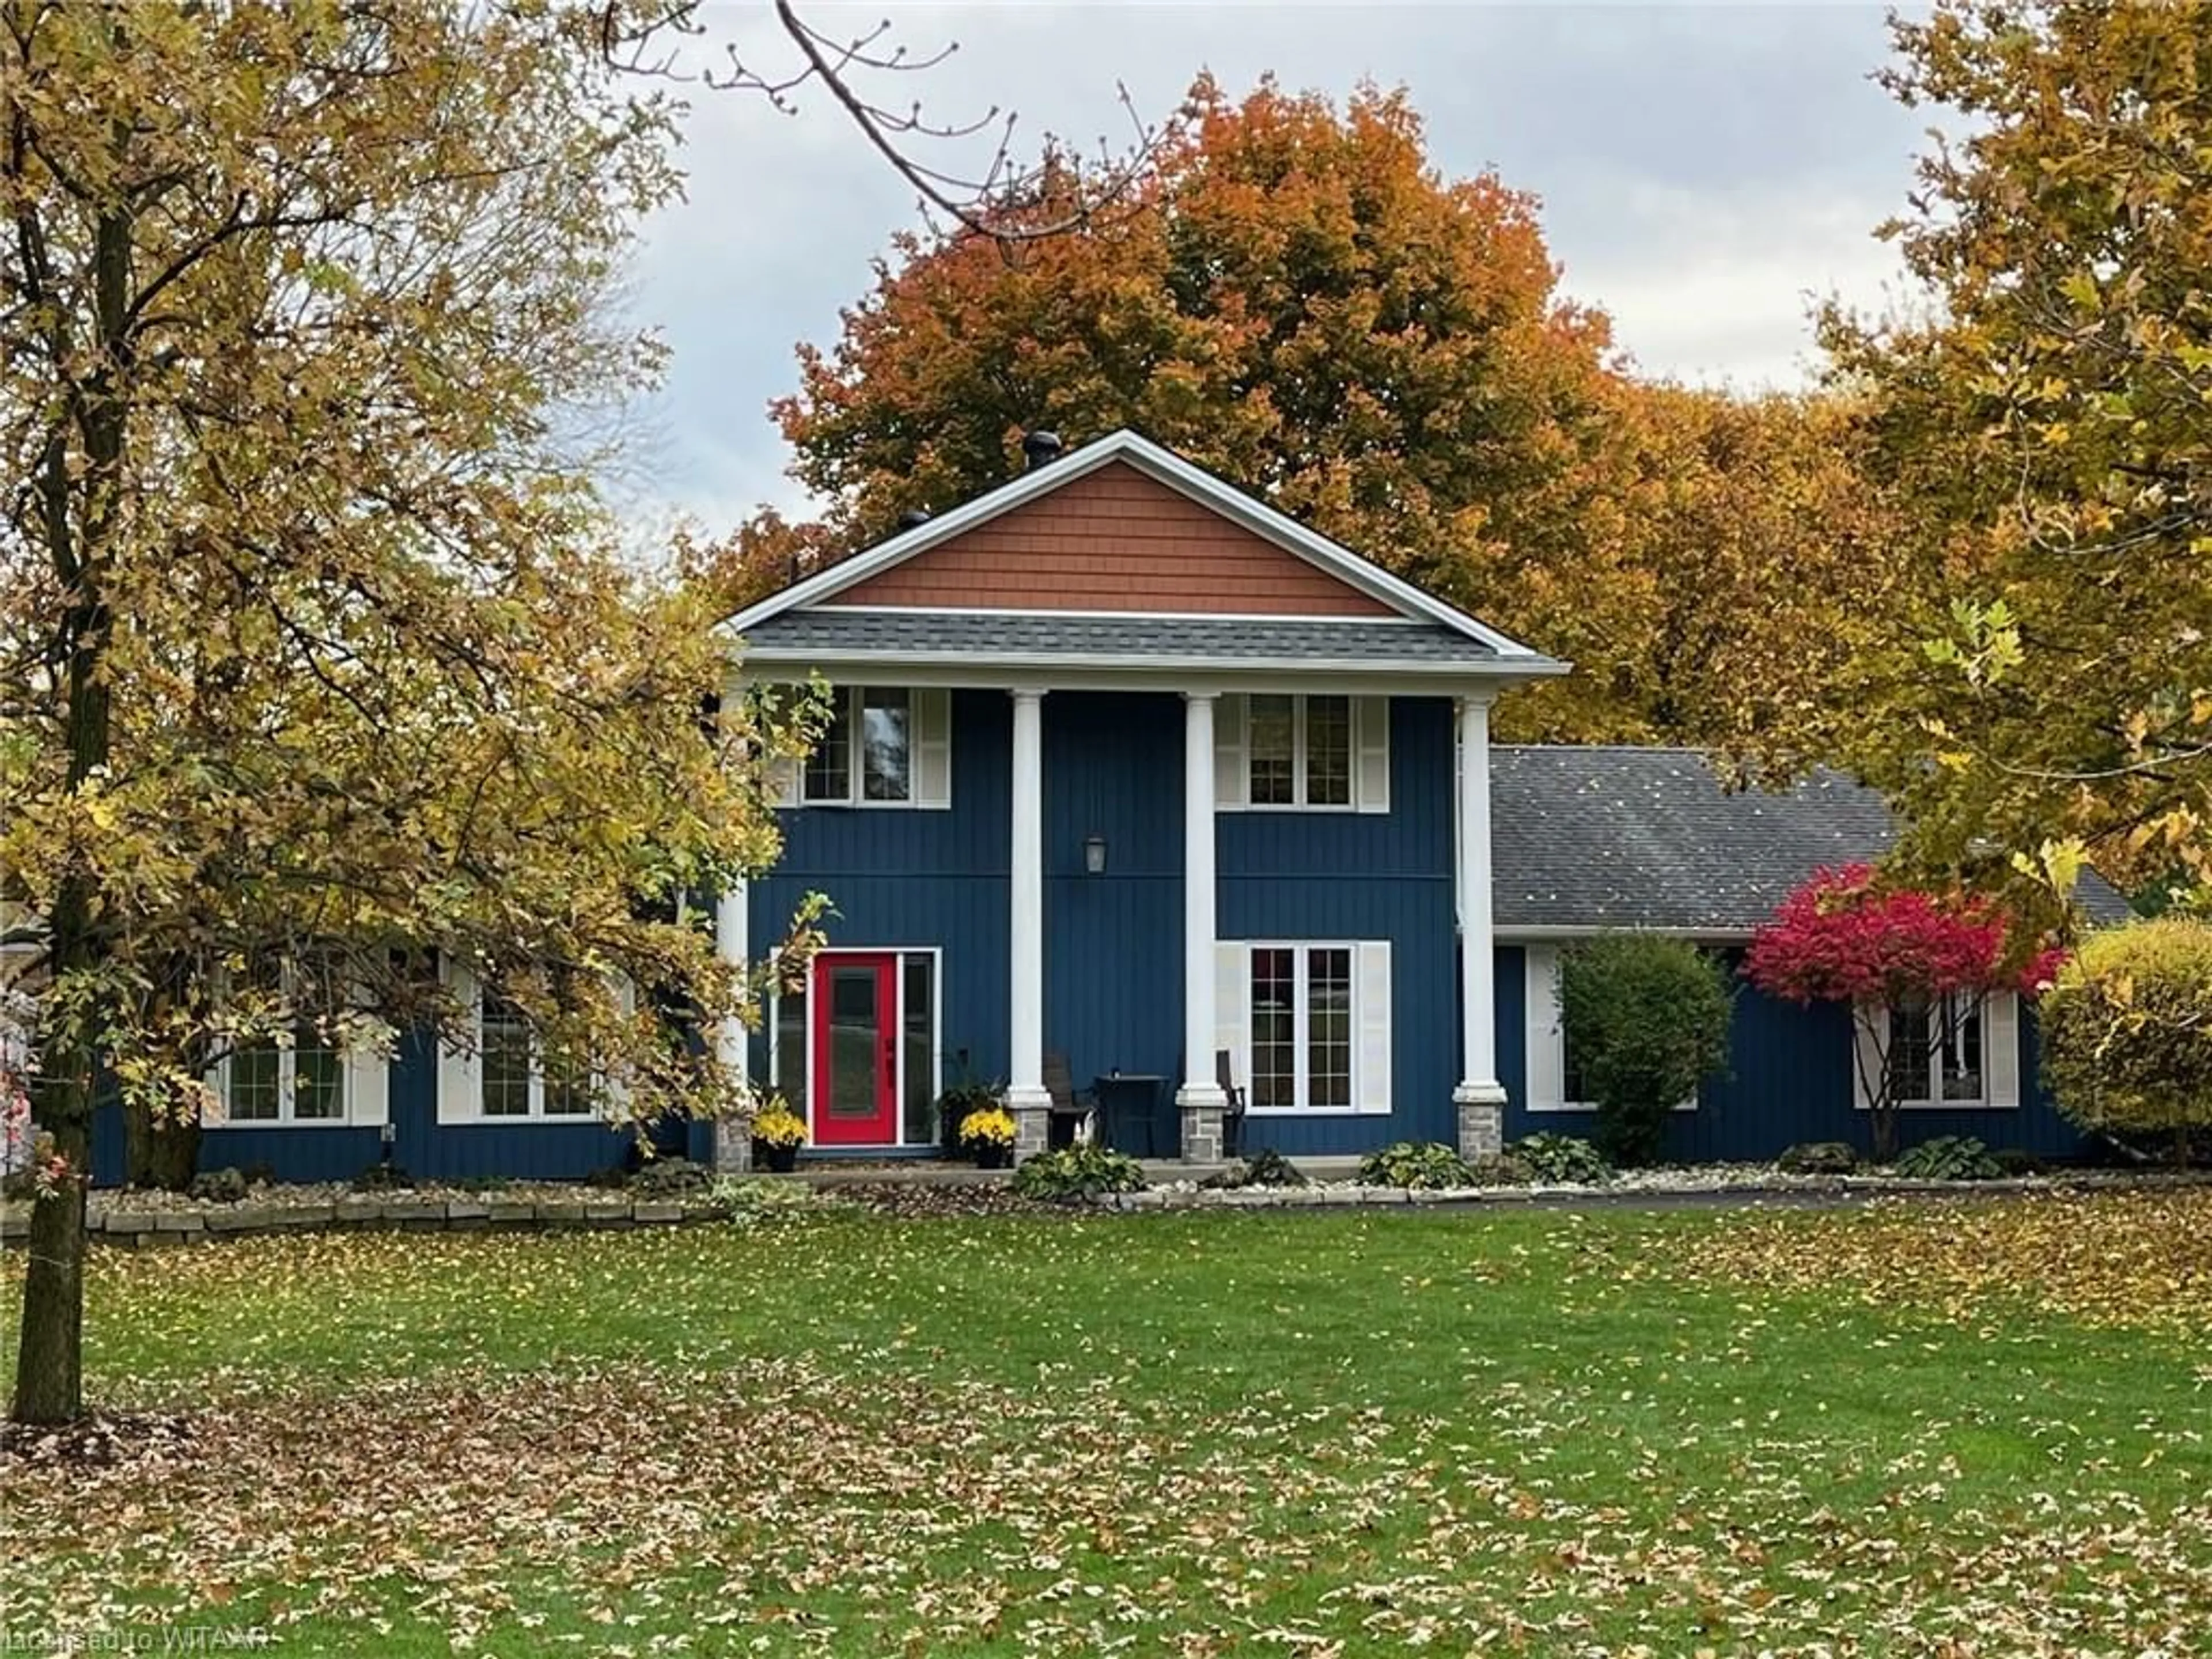 Frontside or backside of a home for 684760 2 Hwy, Woodstock Ontario N4S 7V7